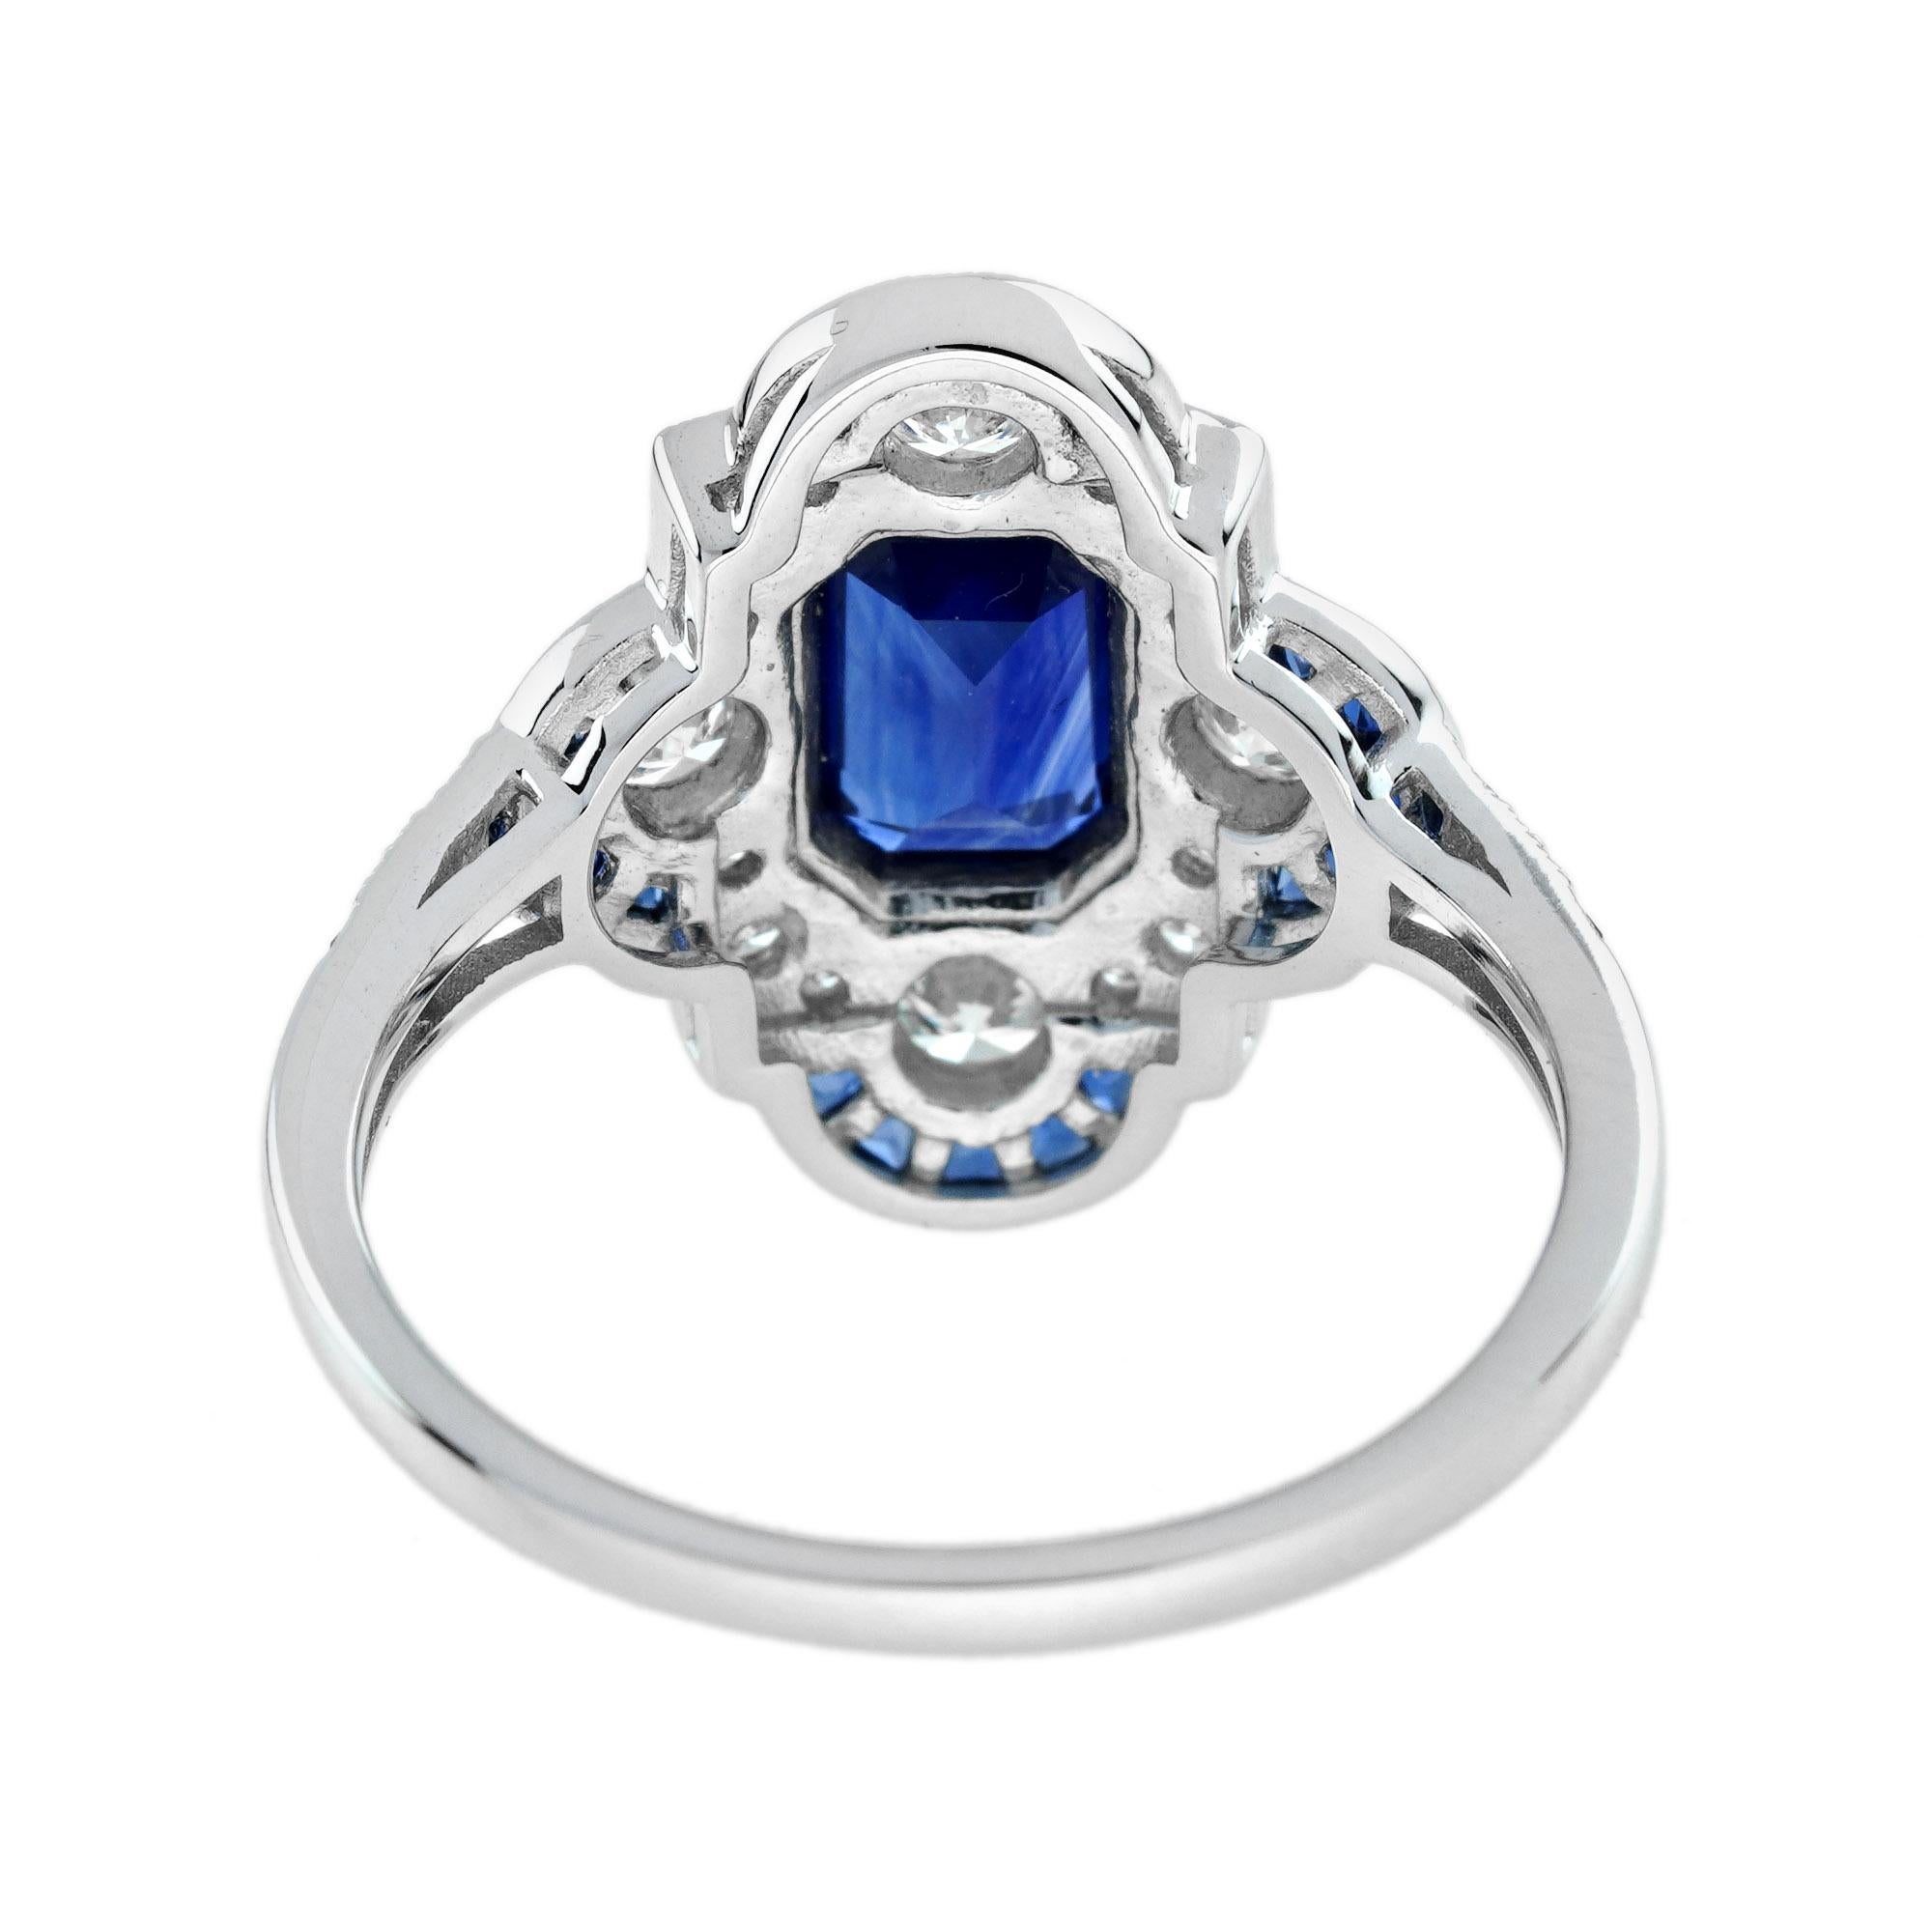 Emerald Cut Ceylon Sapphire and Diamond Art Deco Style Halo Ring in 18K Gold 4